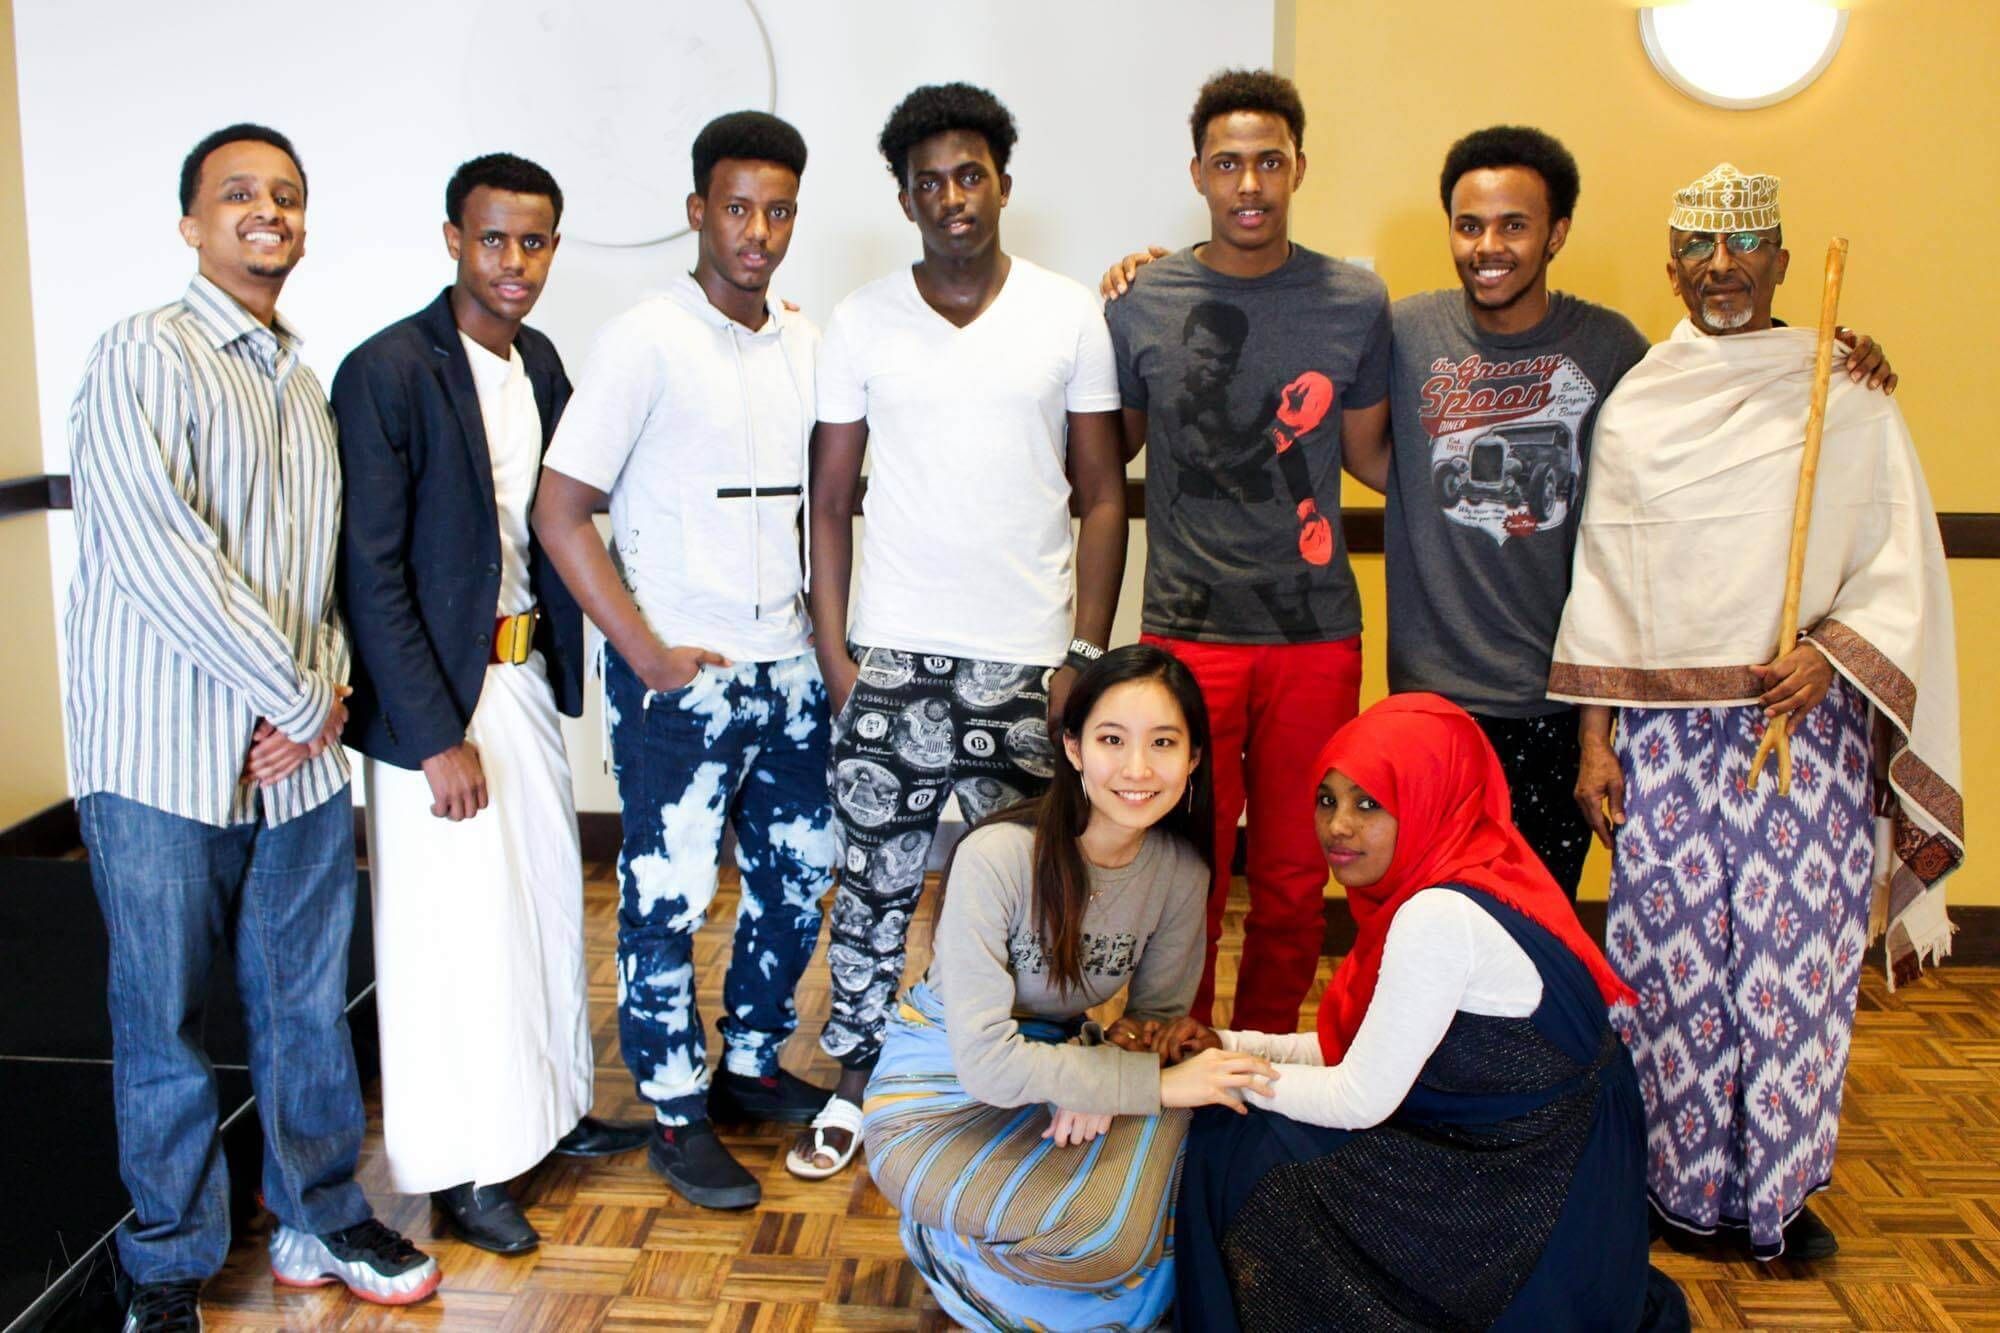 Somali Culture event at University of Minnesota in 2016. Photo courtesy of Somali Museum of Minnesota